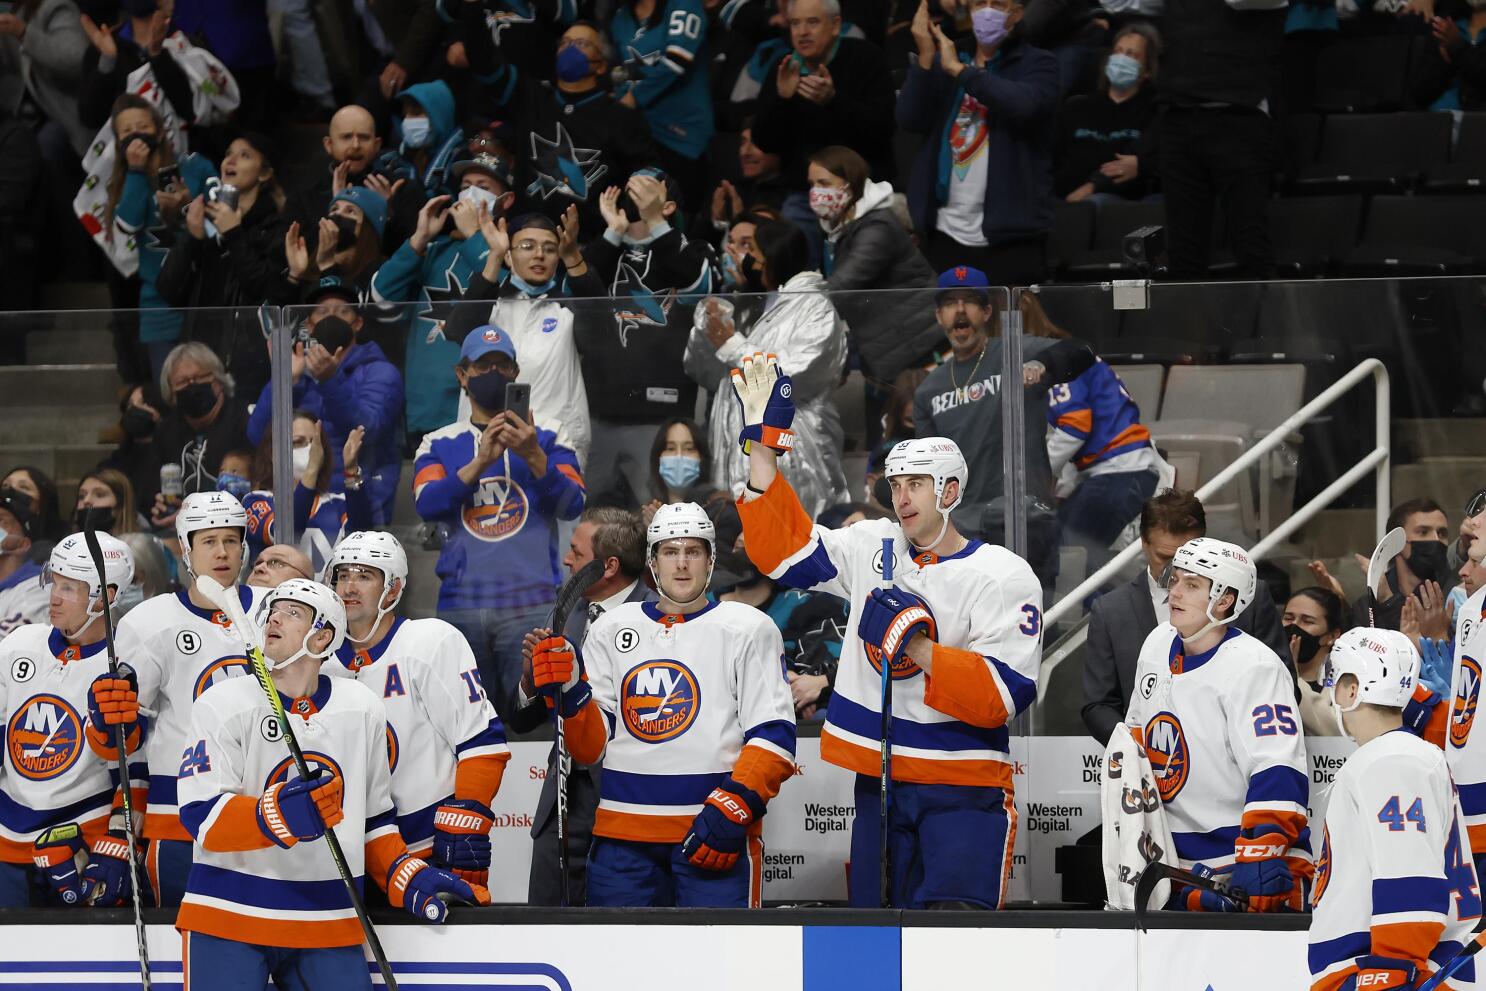 New York Islanders Team History